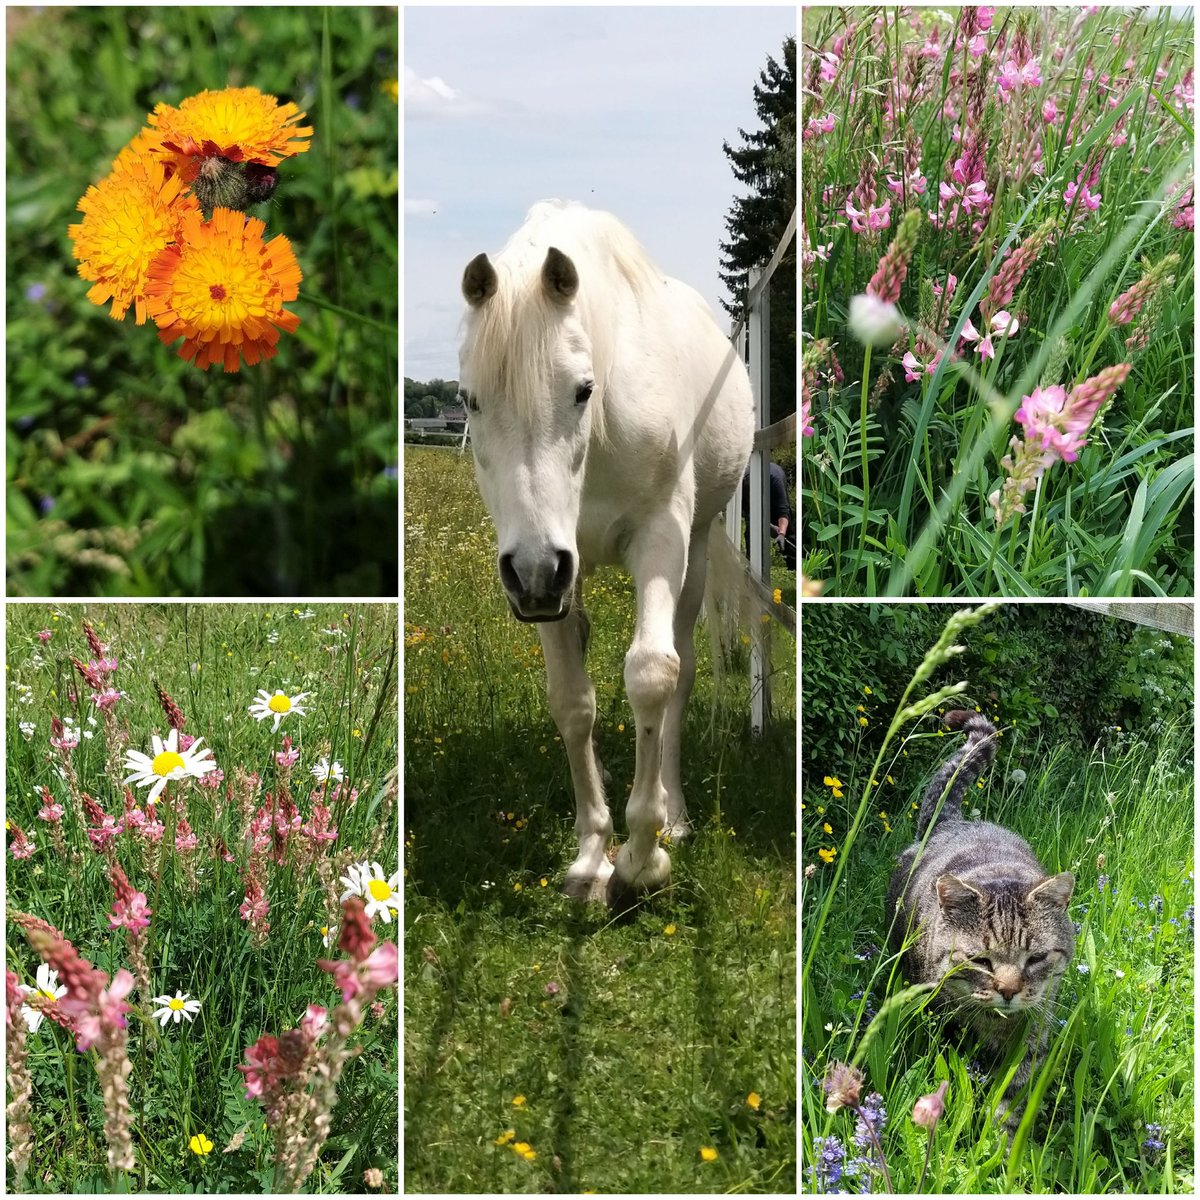 Impressionen... alles darf sein❣

#horse 
#meadowflowers 
#AnimalCrossing 
#sein
#Justbe